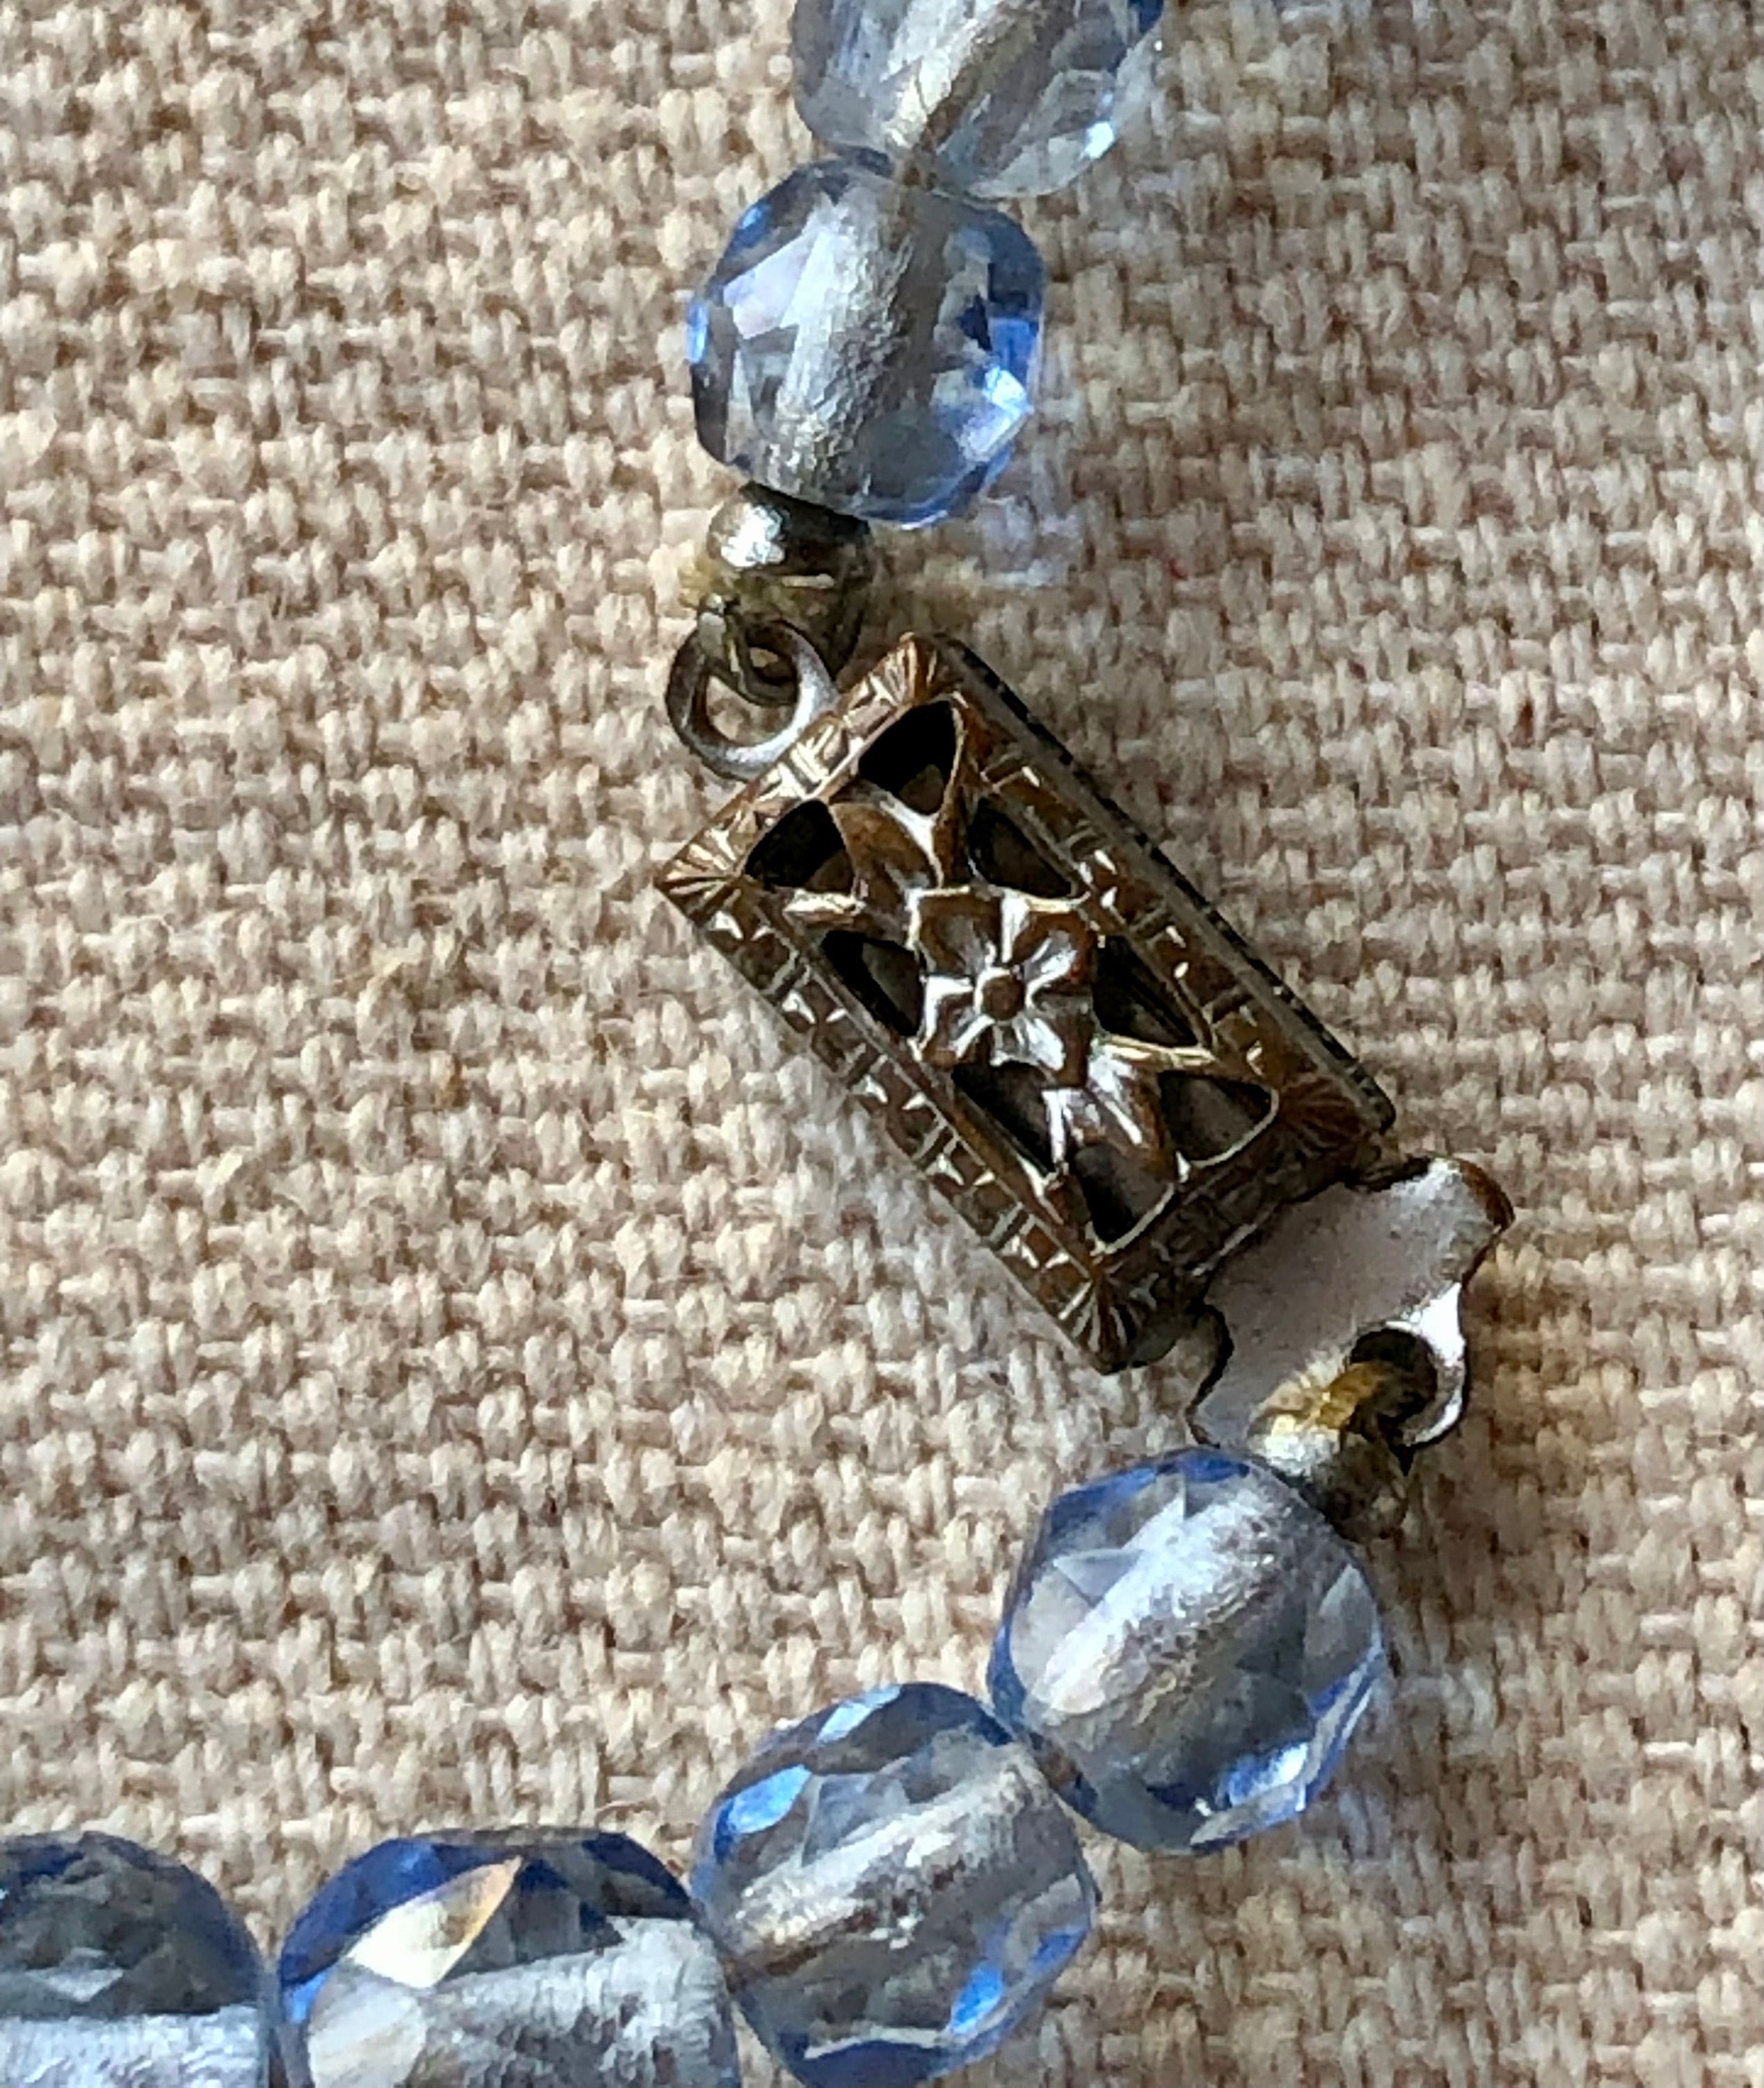 Bijoux collier femme cristal rond bleu - Ref F063 - Collier pendentif femme